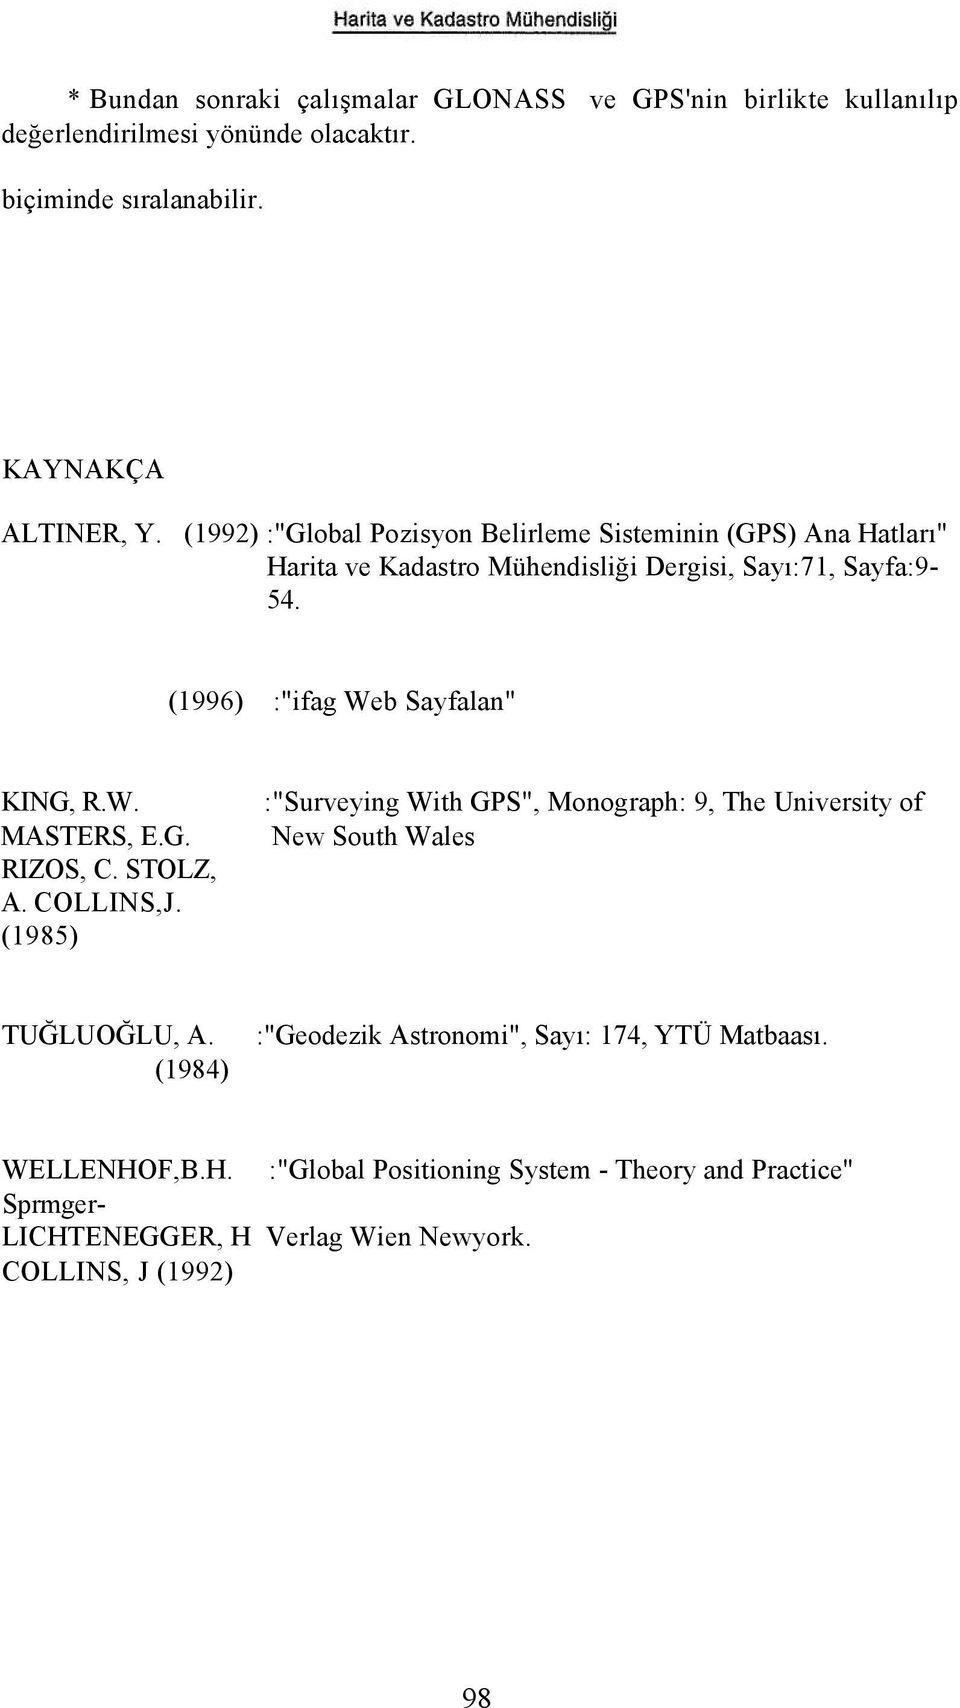 (1996) :"ifag Web Sayfalan" KING, R.W. MASTERS, E.G. RIZOS, C. STOLZ, A. COLLINS,J.